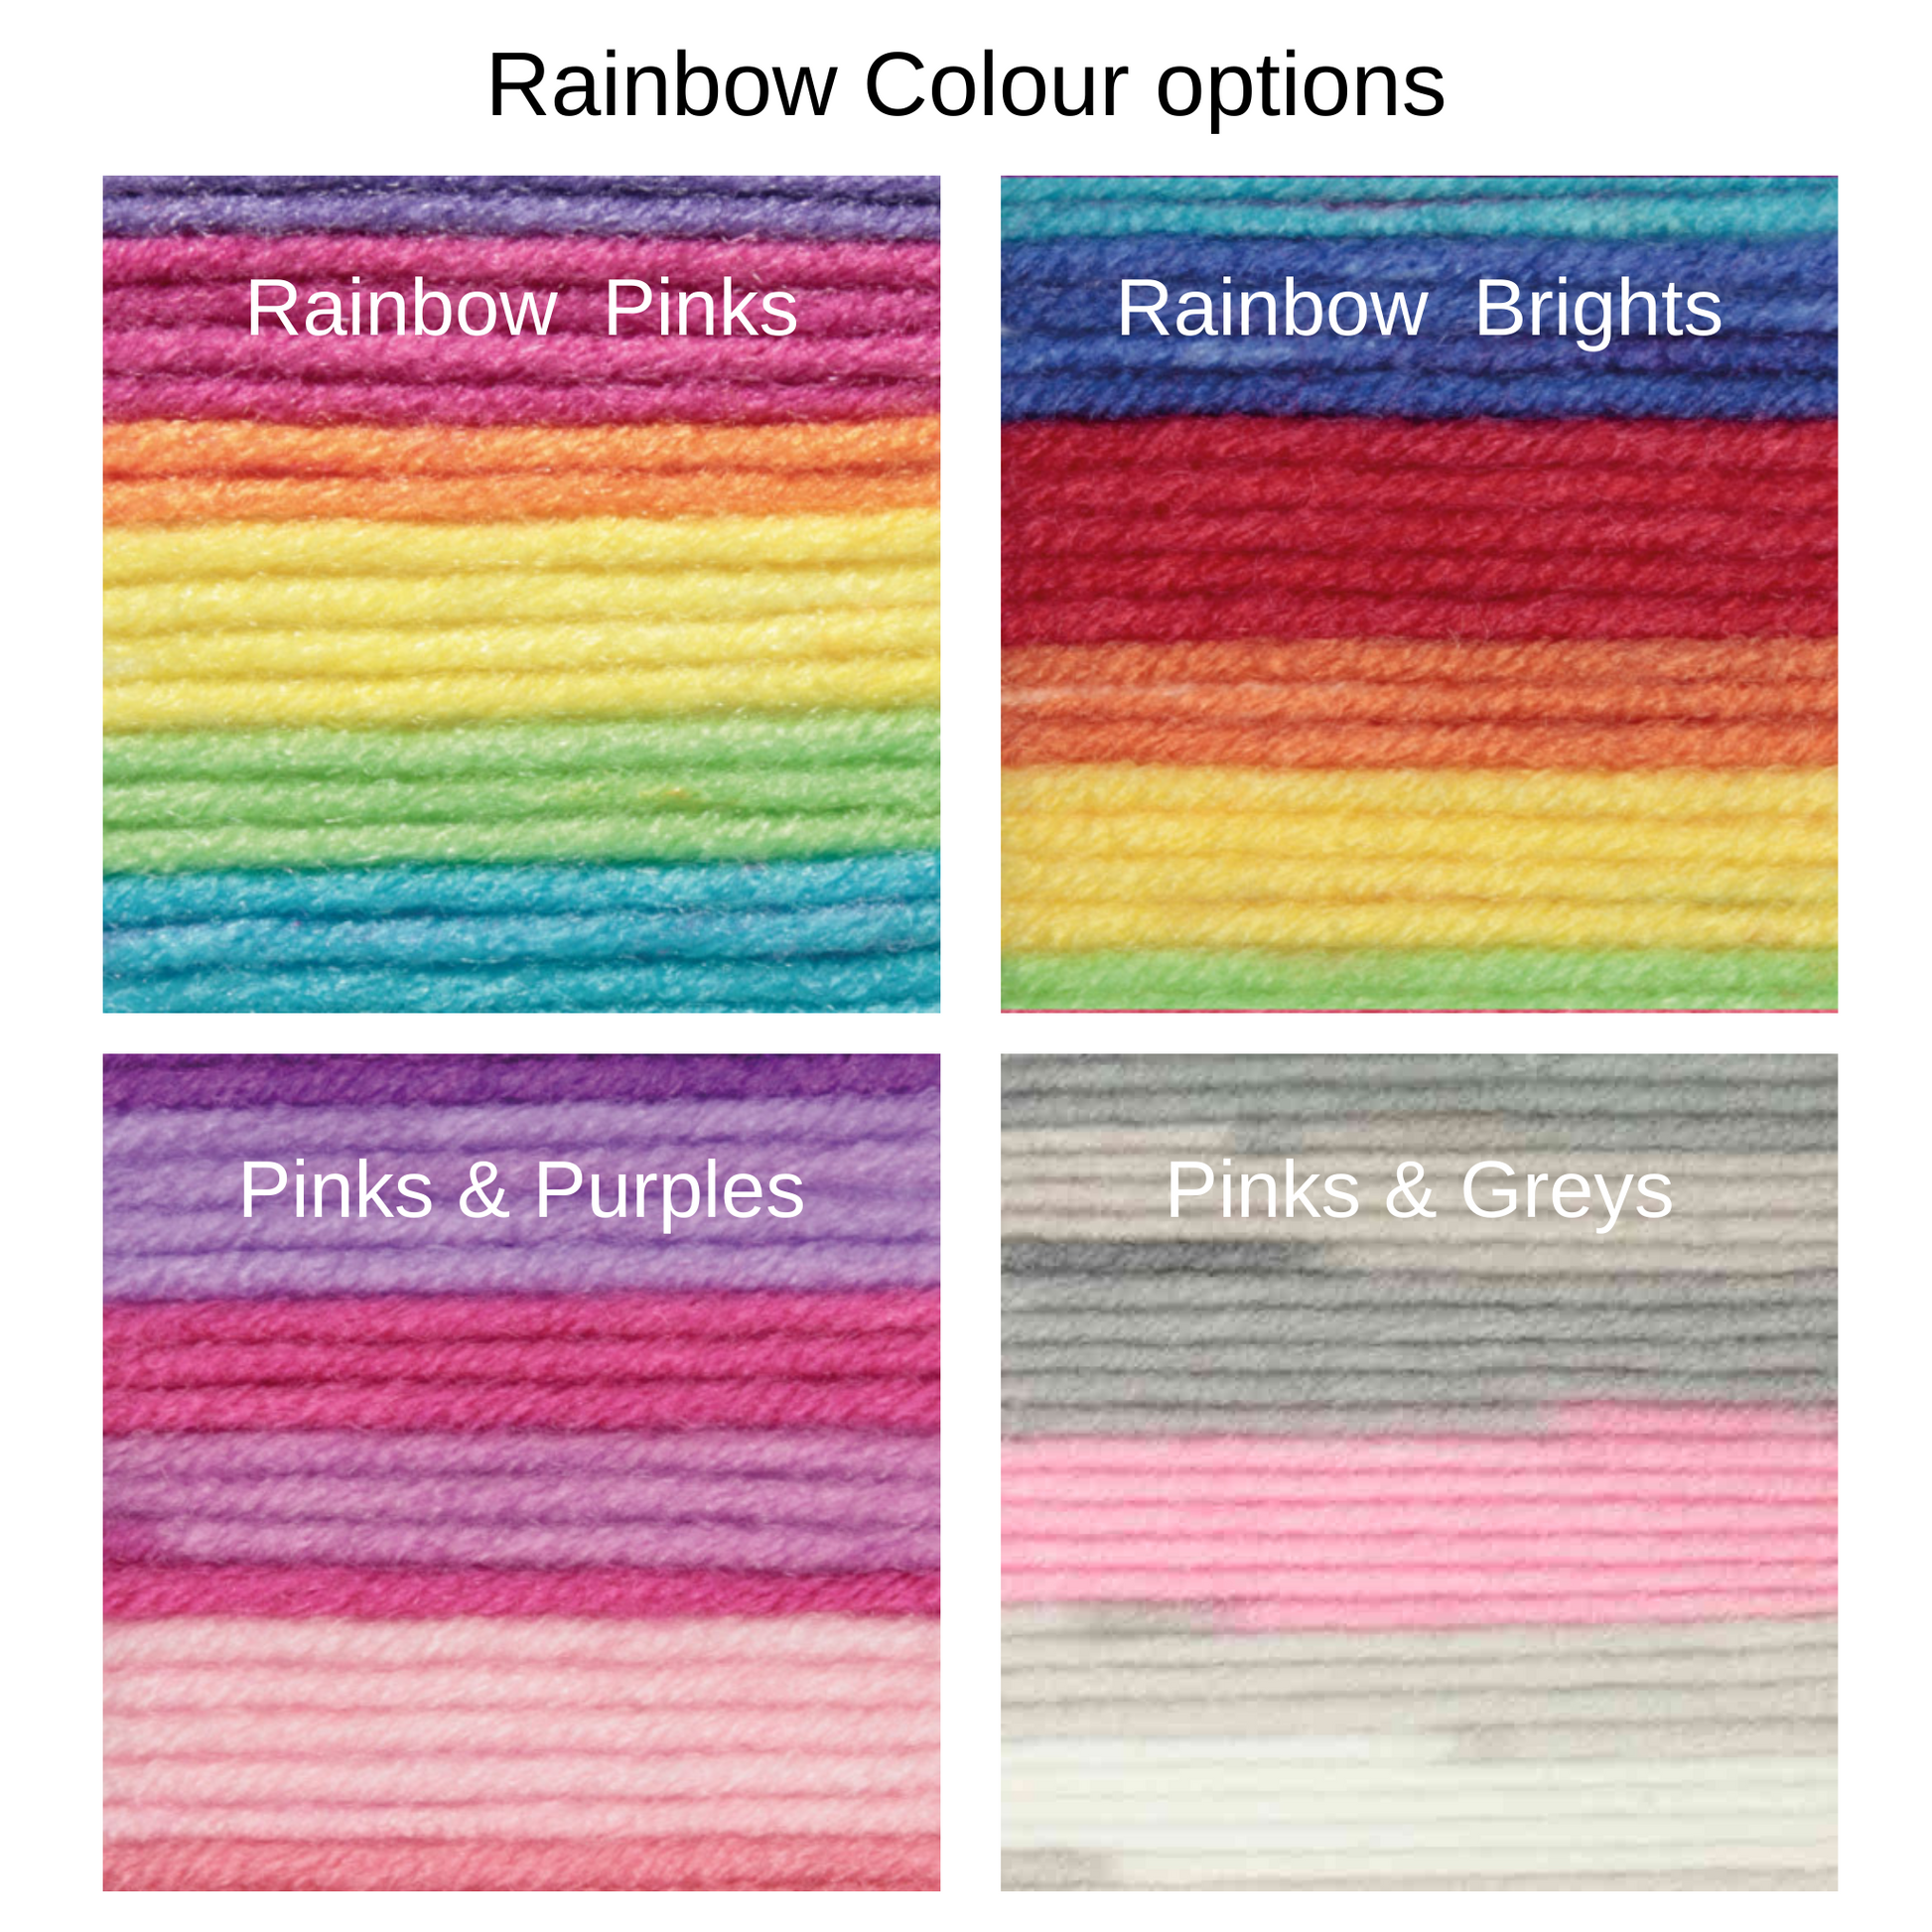 Wool Colour Options for Rainbow Toy Giraffe Crochet Kit